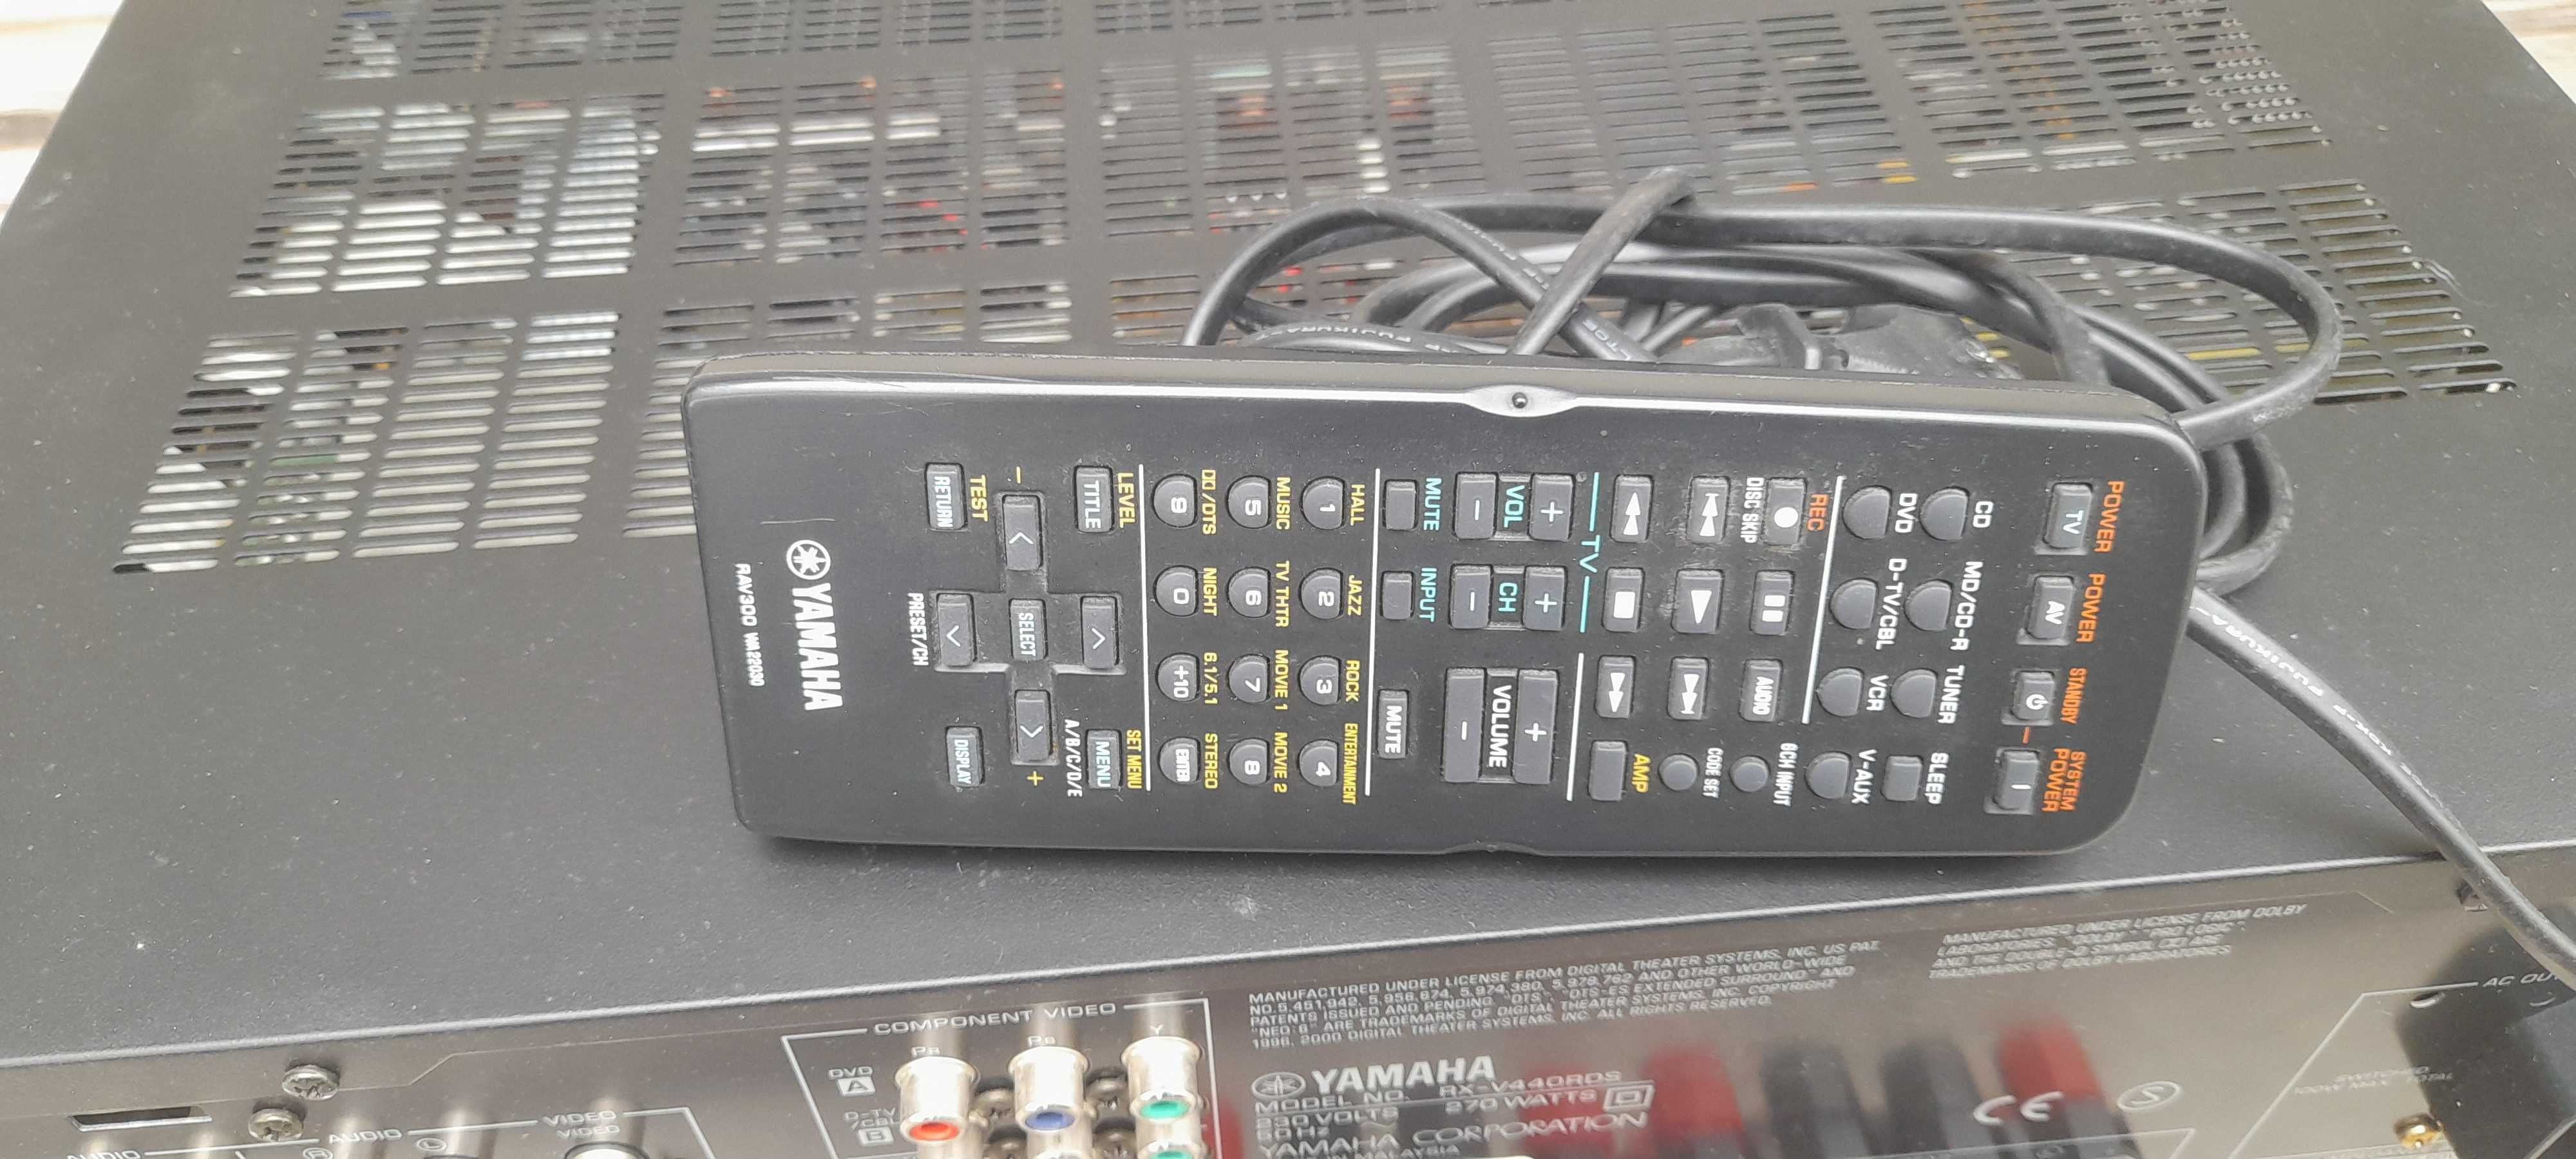 Yamaha RX-V440 RDS (kino domowe, wzmacniacz, amplituner)